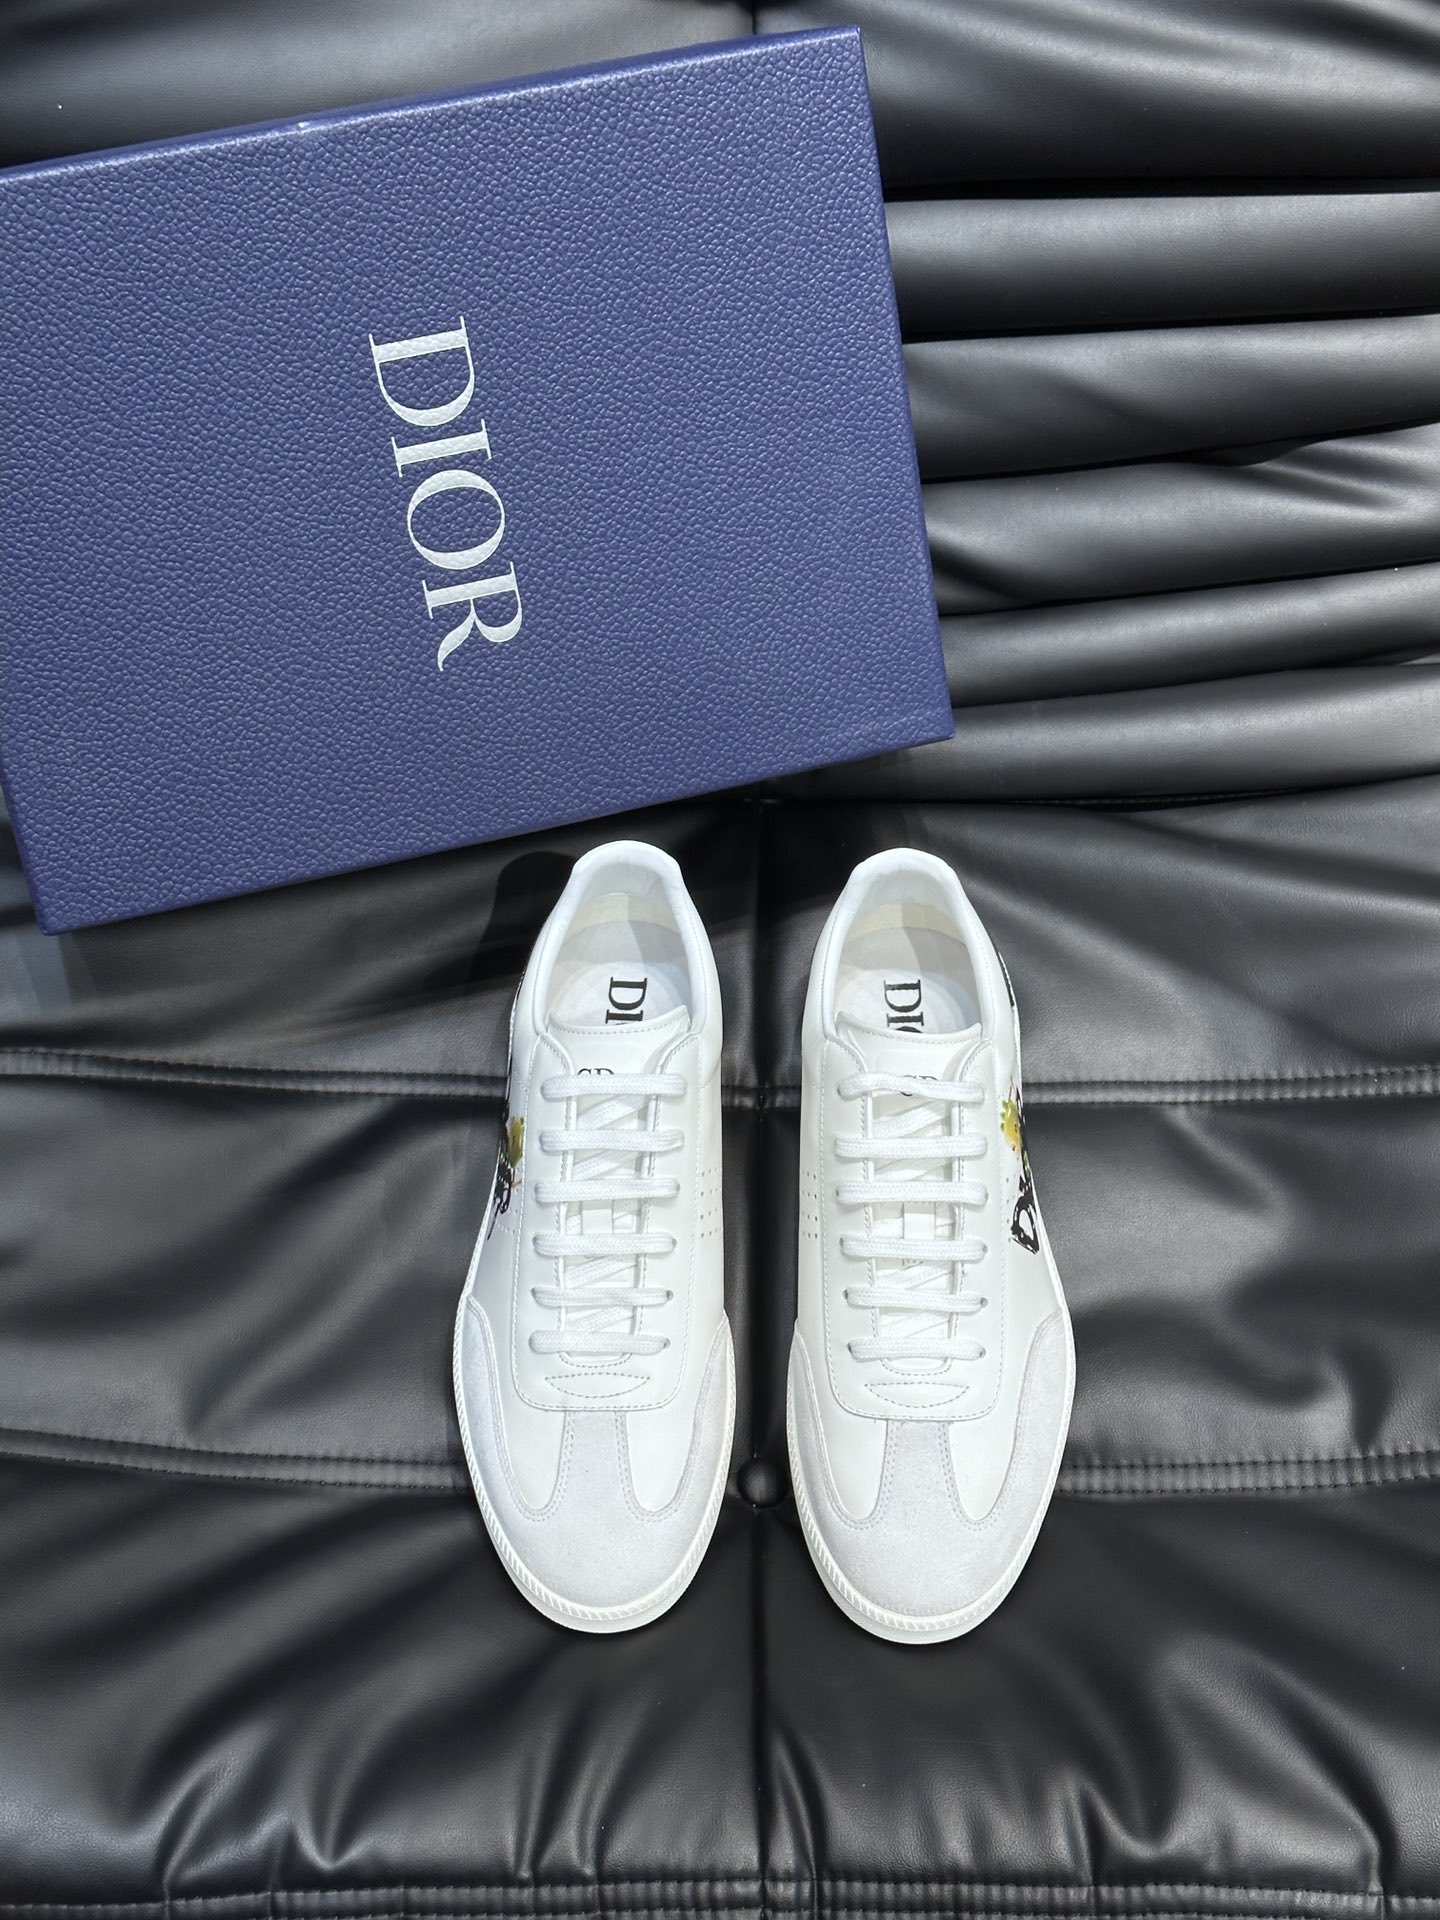 D～r 新款 B01 运动鞋是D家经典单品，鞋面采用原版牛皮绒面革以及由 Daniel Arsham 重新诠释的“Dior”徽标装饰。鞋面顶部采用白色系带，与富有纹理的白色橡胶外底相得益彰。体现 D家的标志性特征之一。款式精致，与西装等服装搭配更显清新。Size：39-44（38.45.46.47定做）